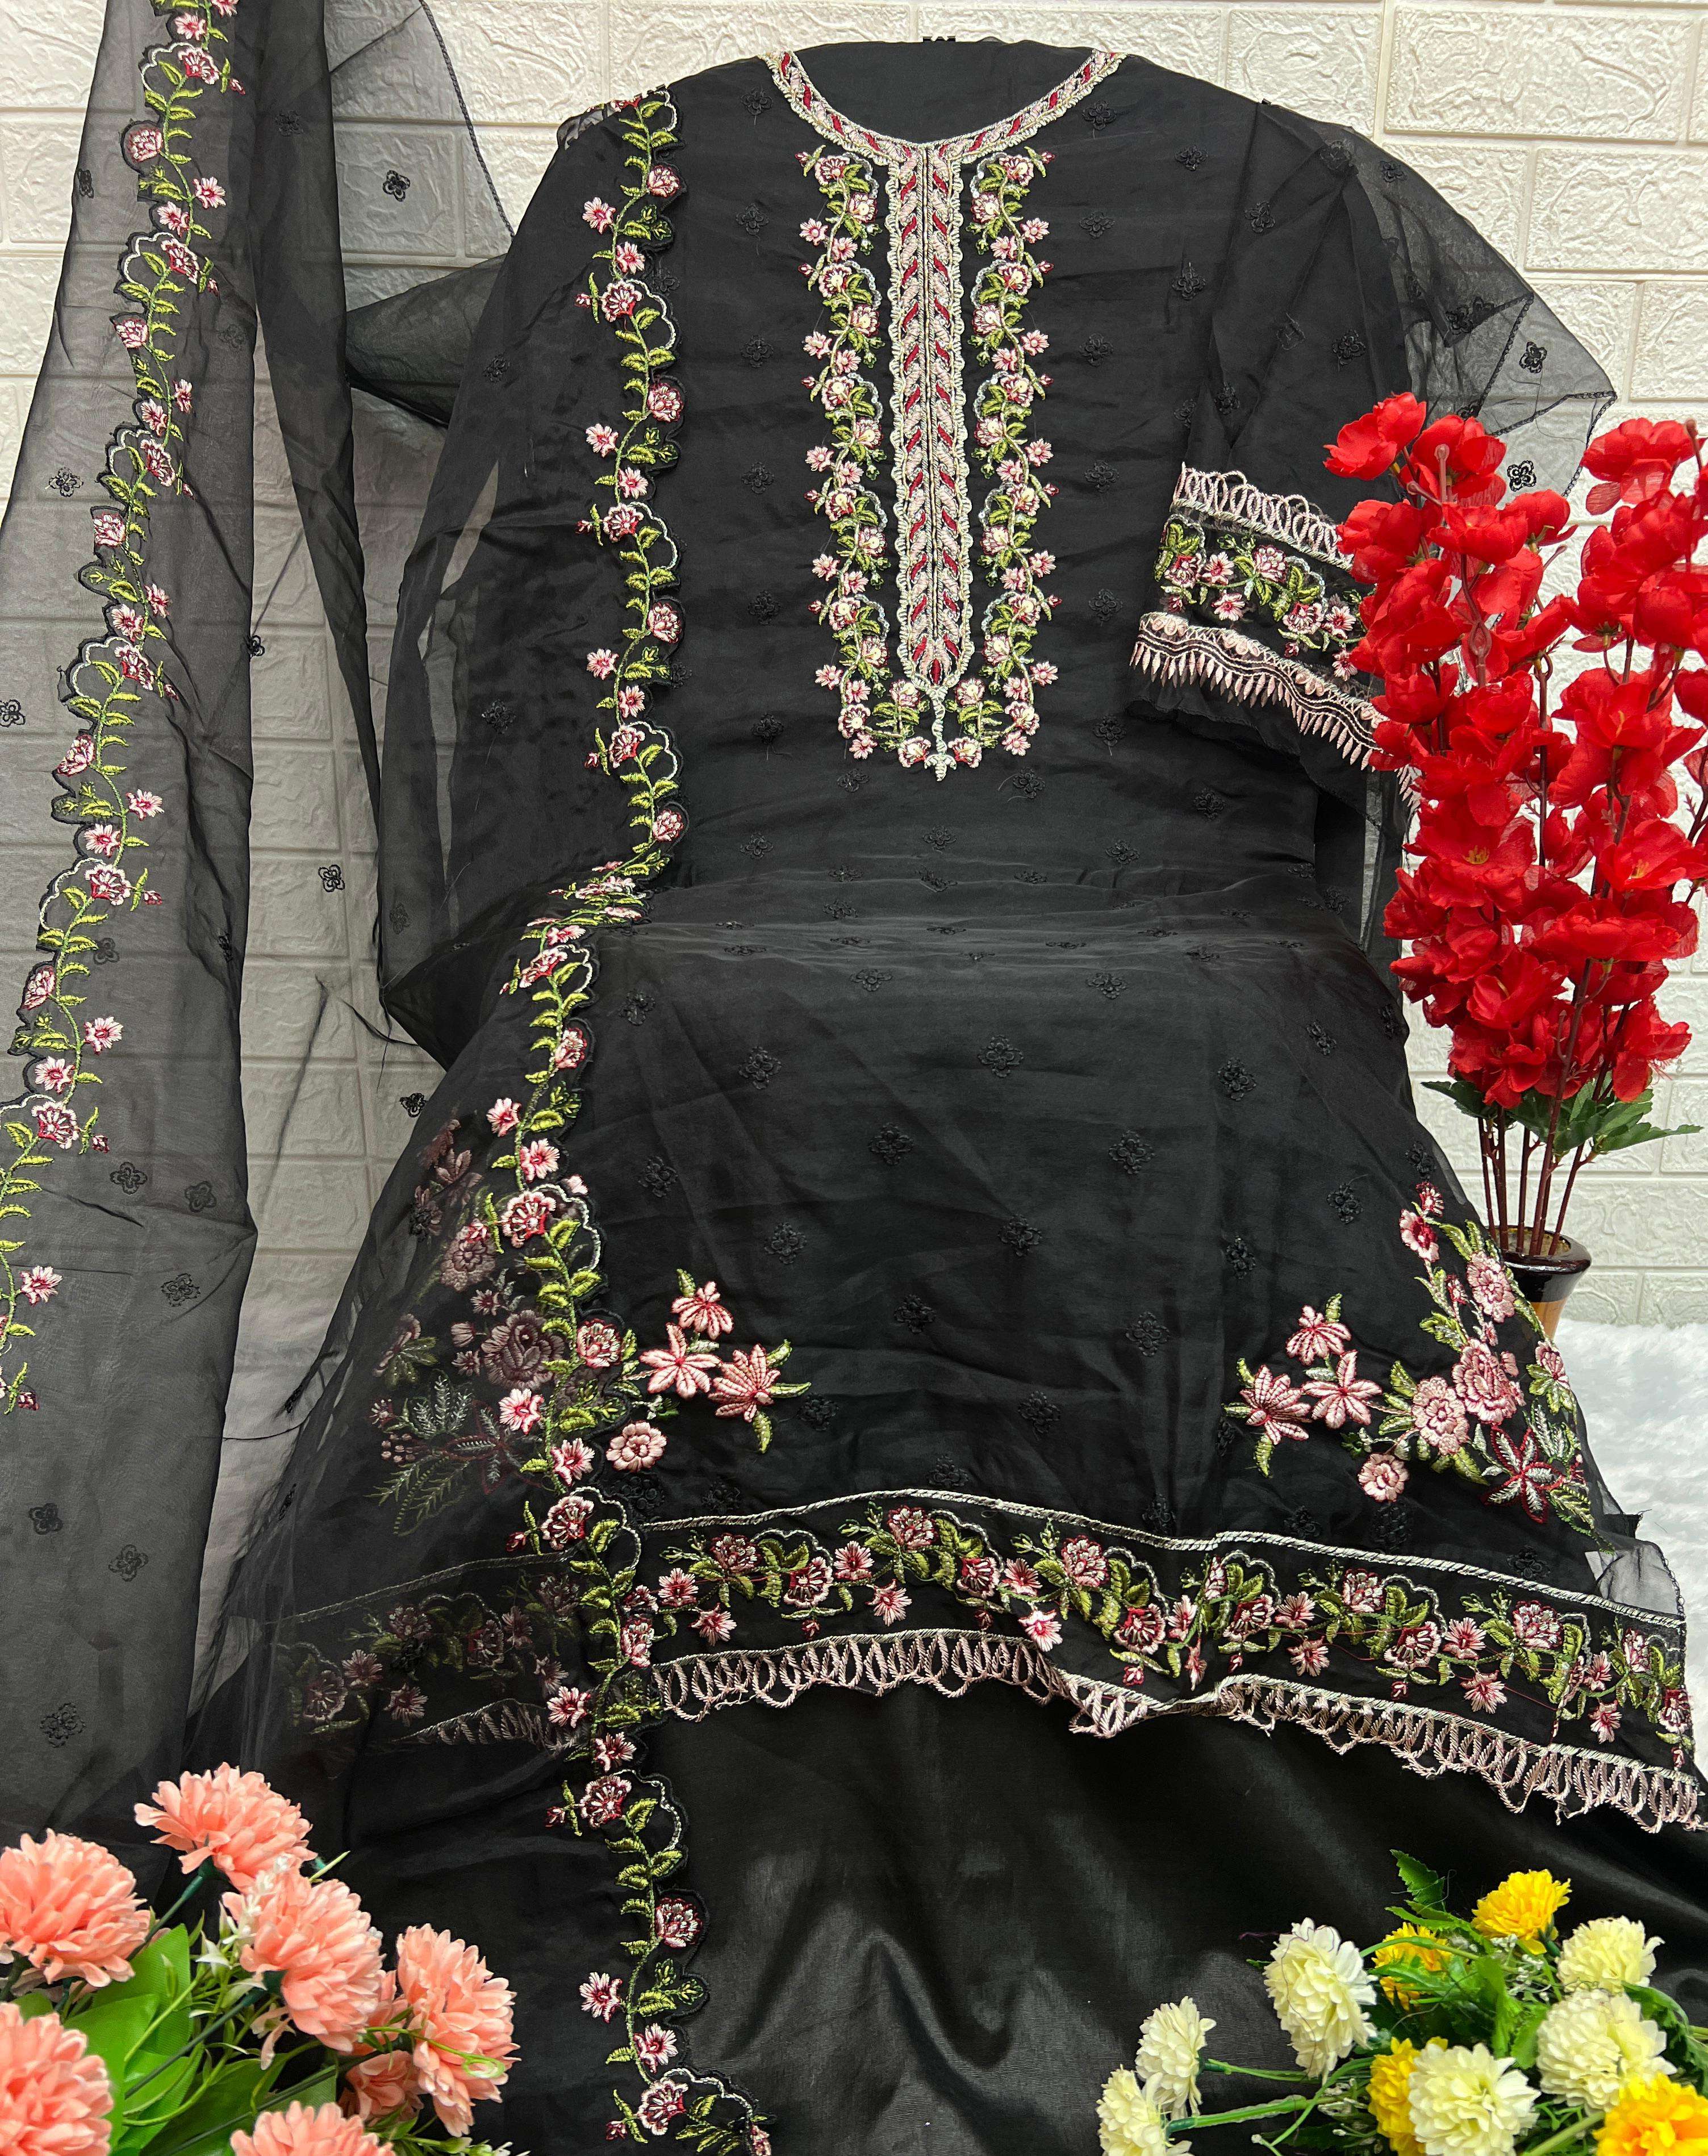 bilqistm D NO  B 36 A TO D organza decent embroidery look salwar suit single